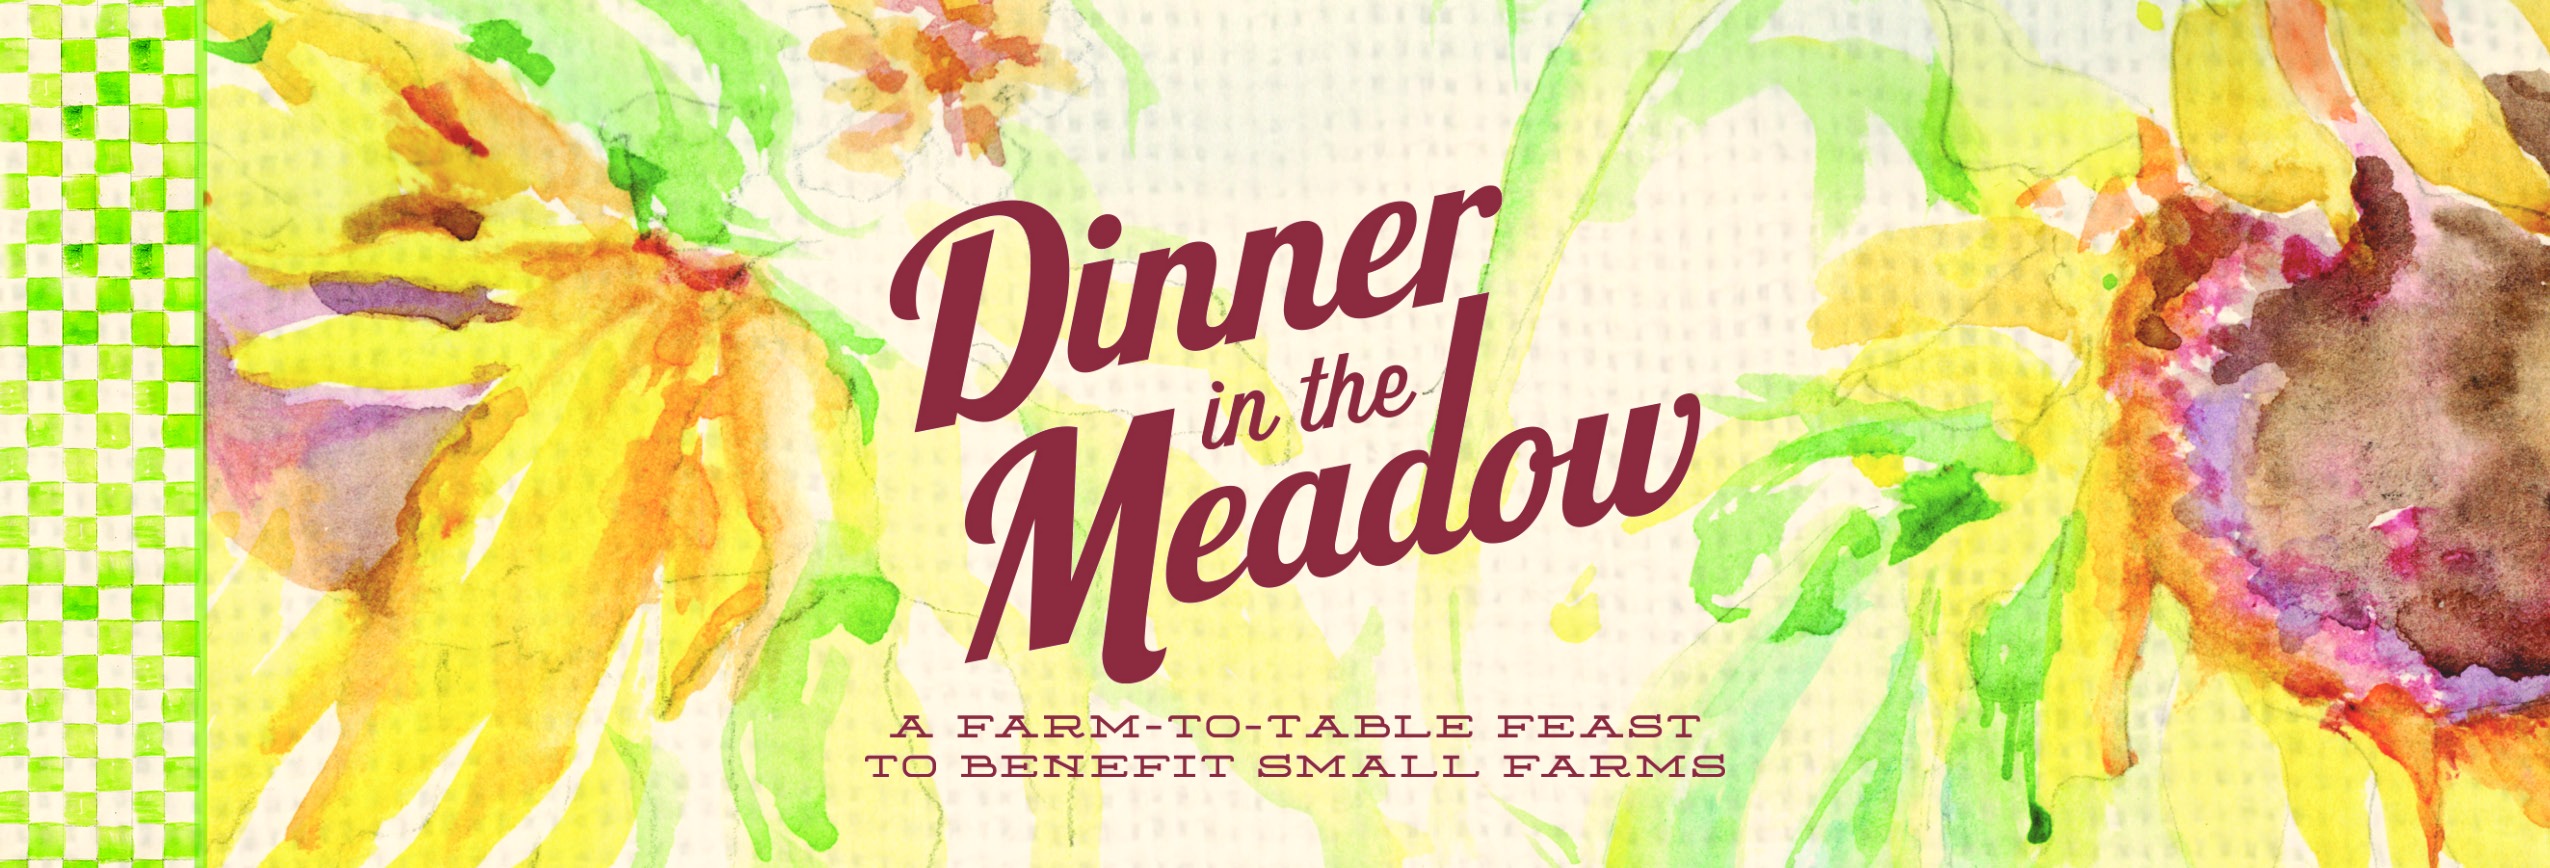 Dinner Meadow Logo Banner